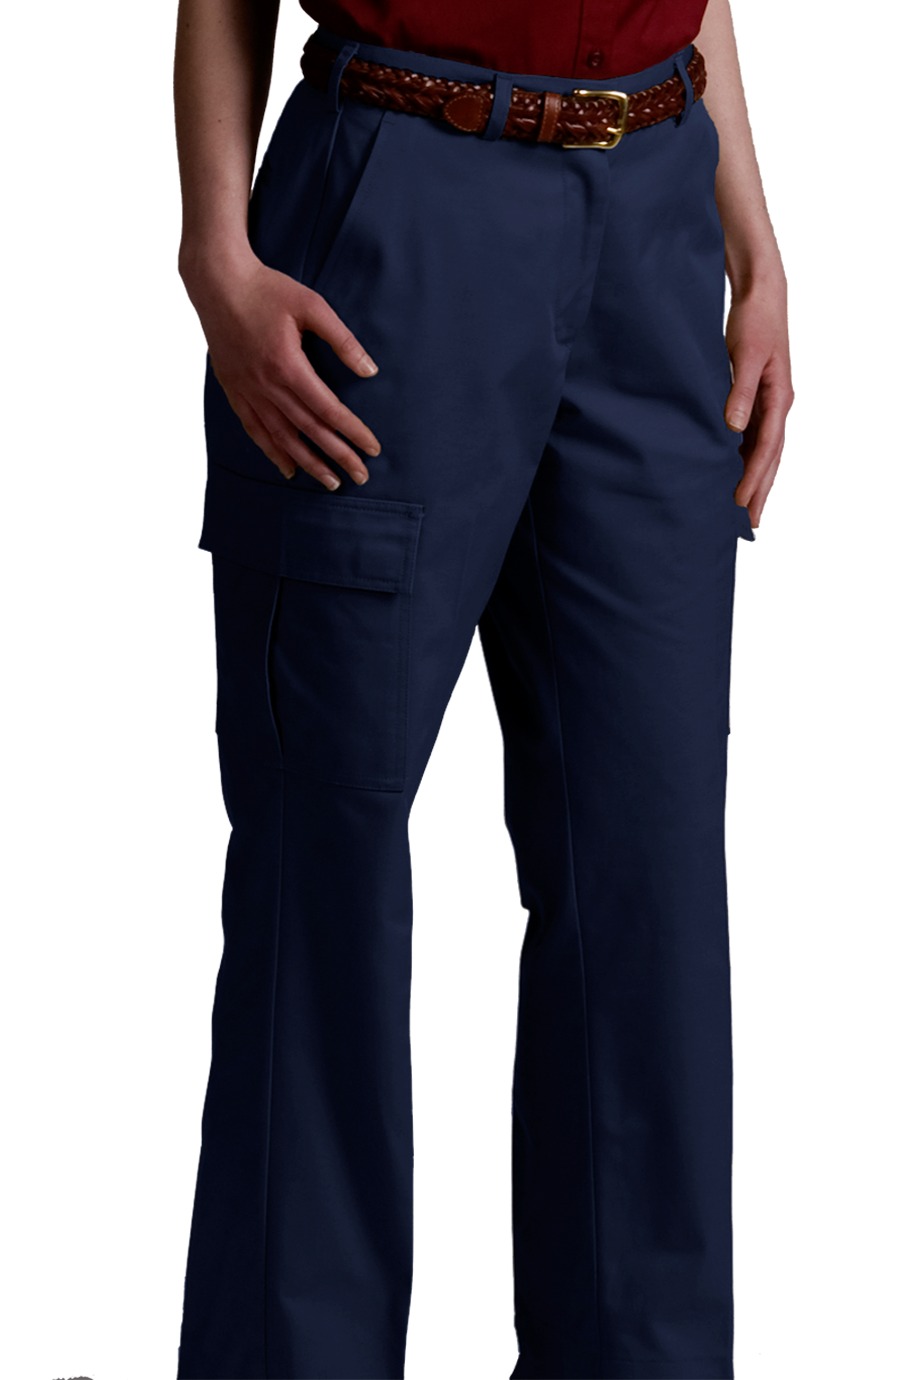 Edwards Garment 8568 - Women's Utility Cargo Pant